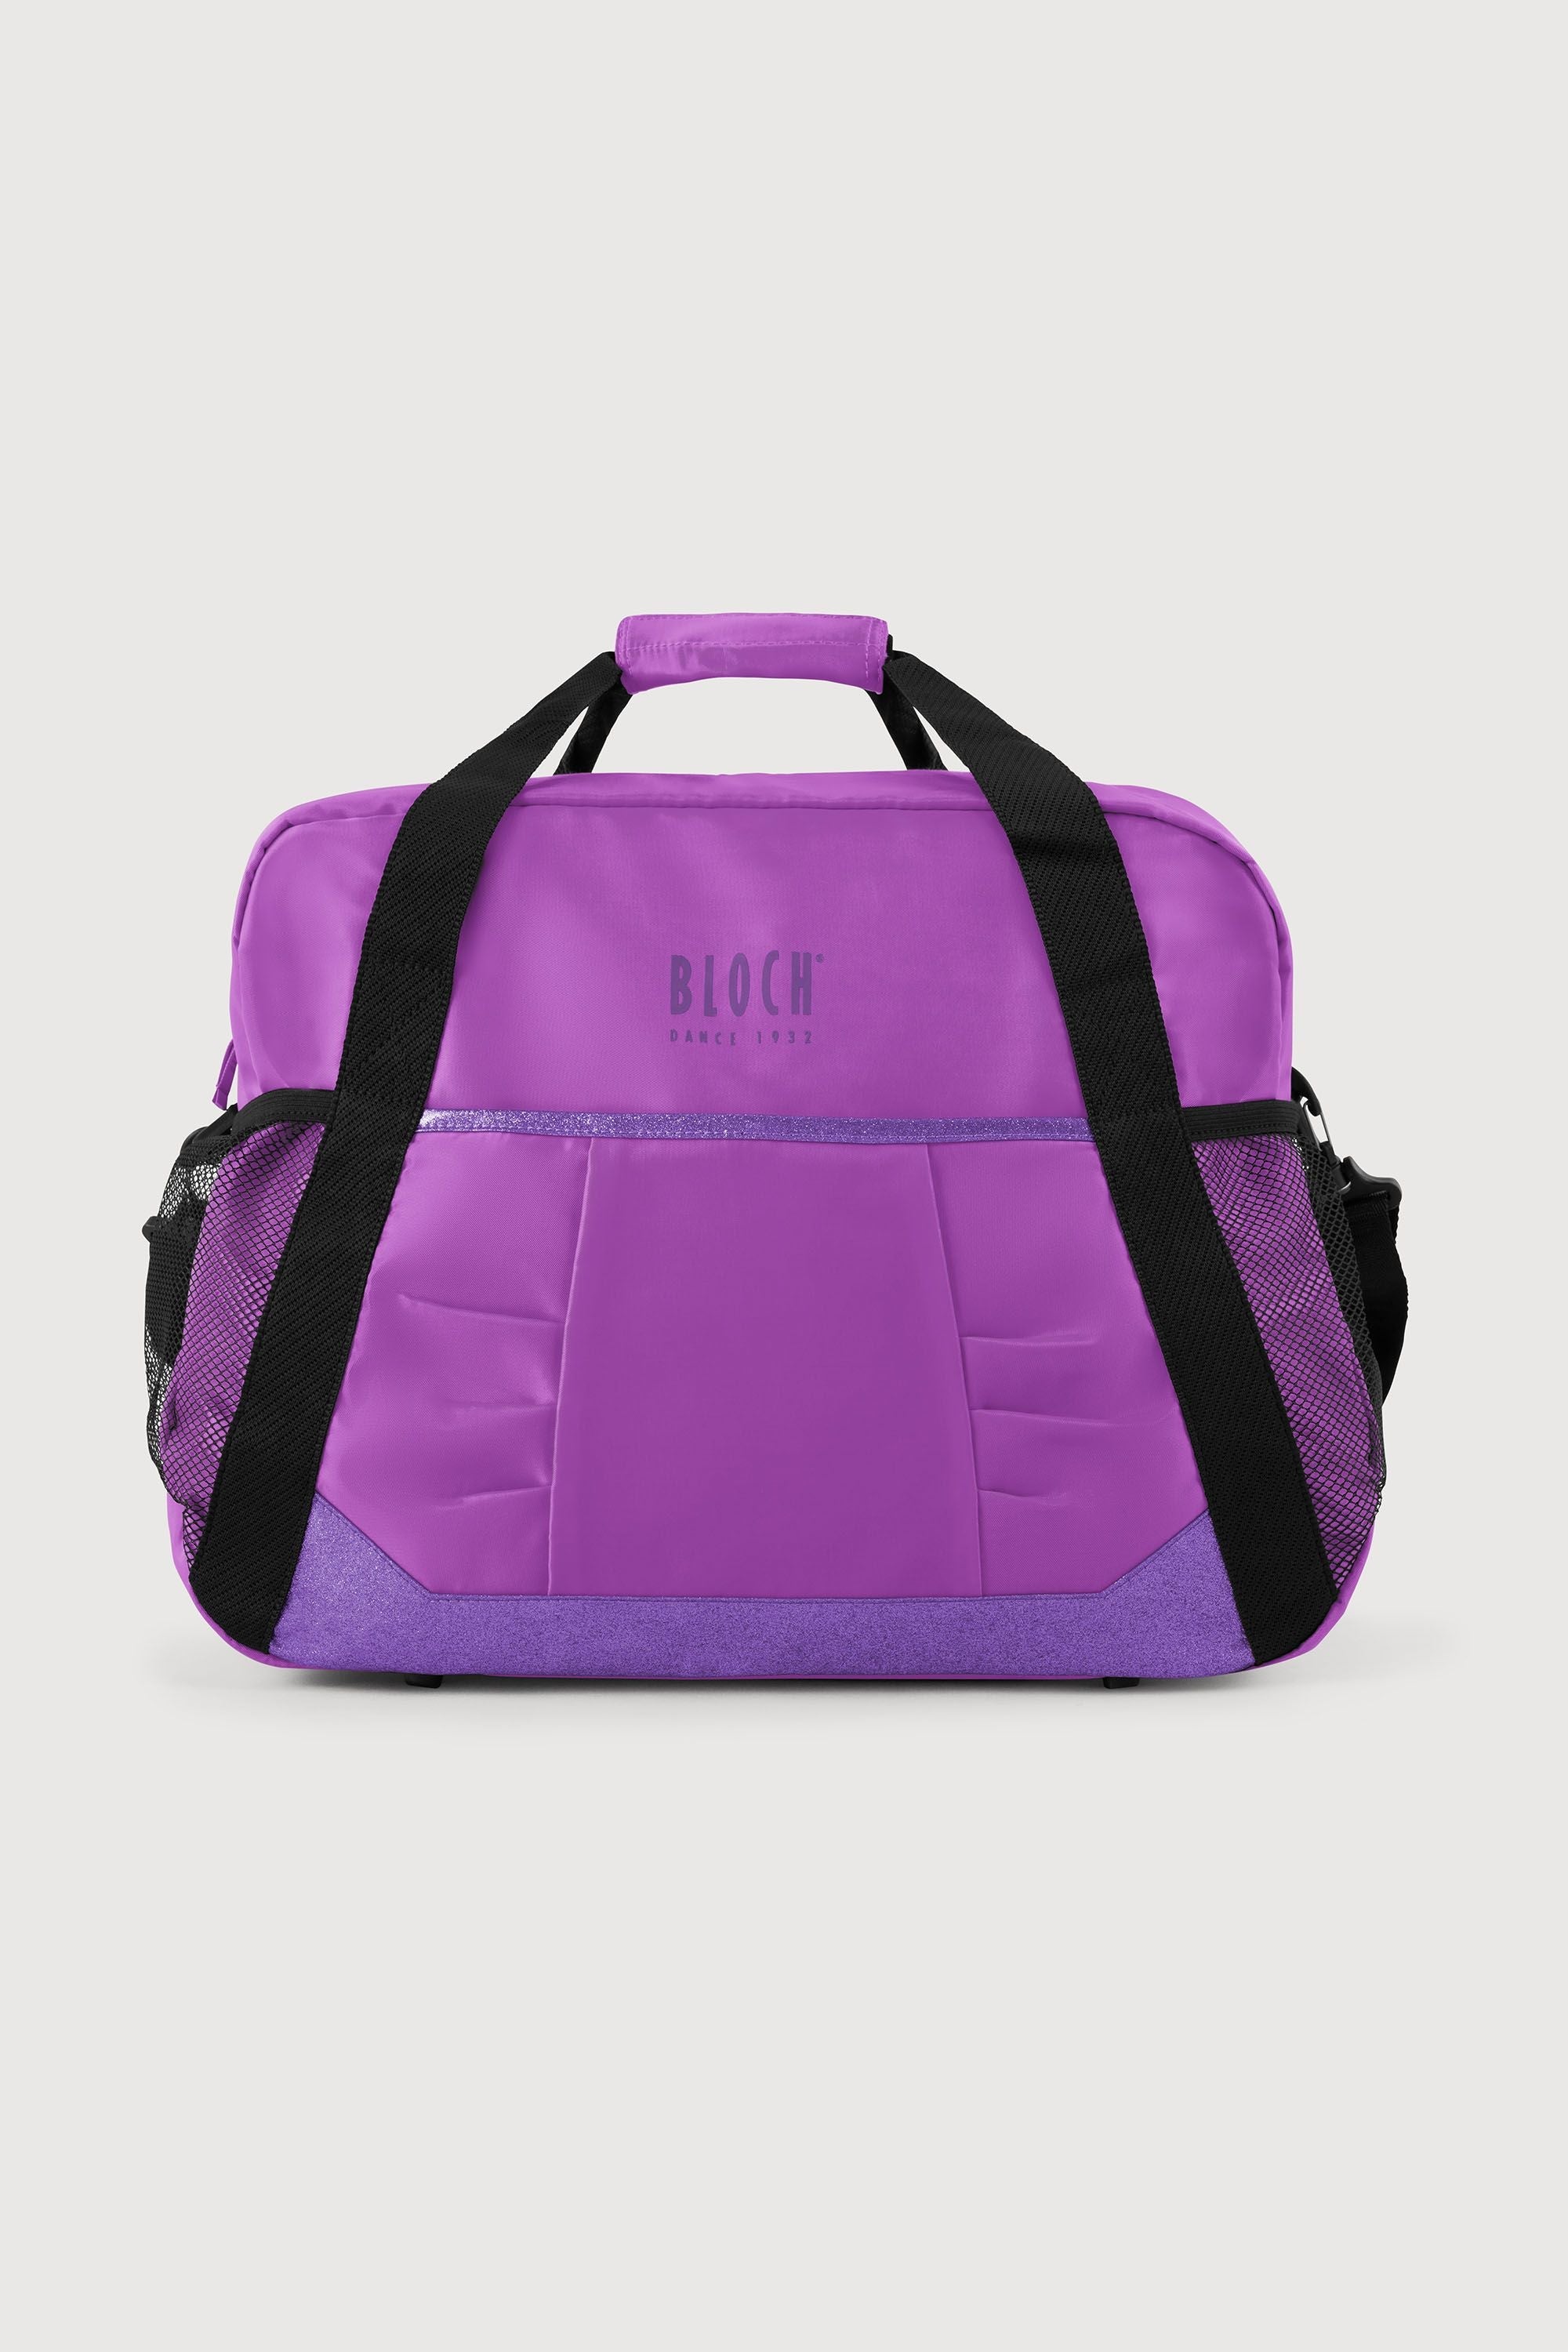 Cheap Design Girls Ballet Dance Bag Pink Ballerina Backpacks Waterproof PU  Shoulder Bags for Kids | Joom